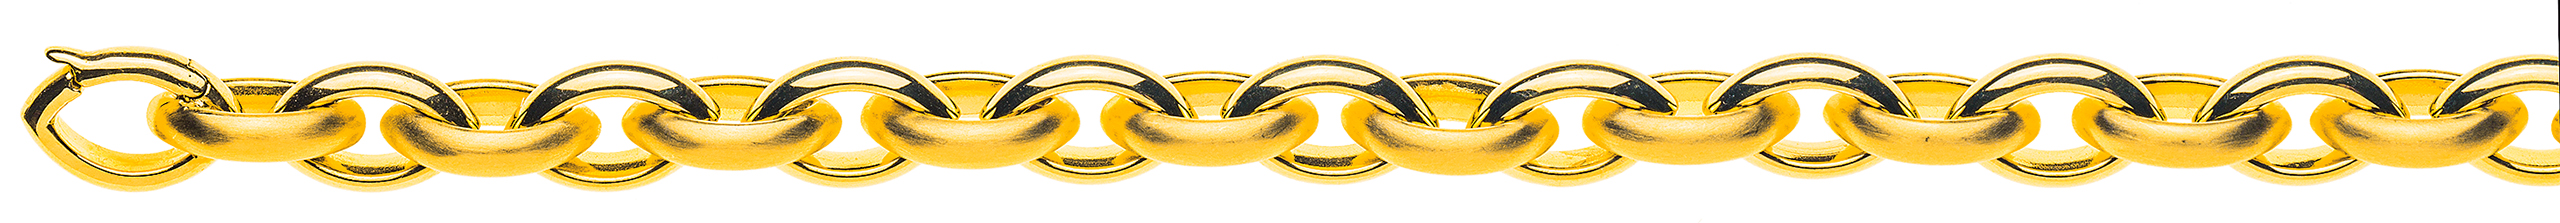 AURONOS Prestige Bracelet 18k yellow gold navette chain 9.5mm 20cm 